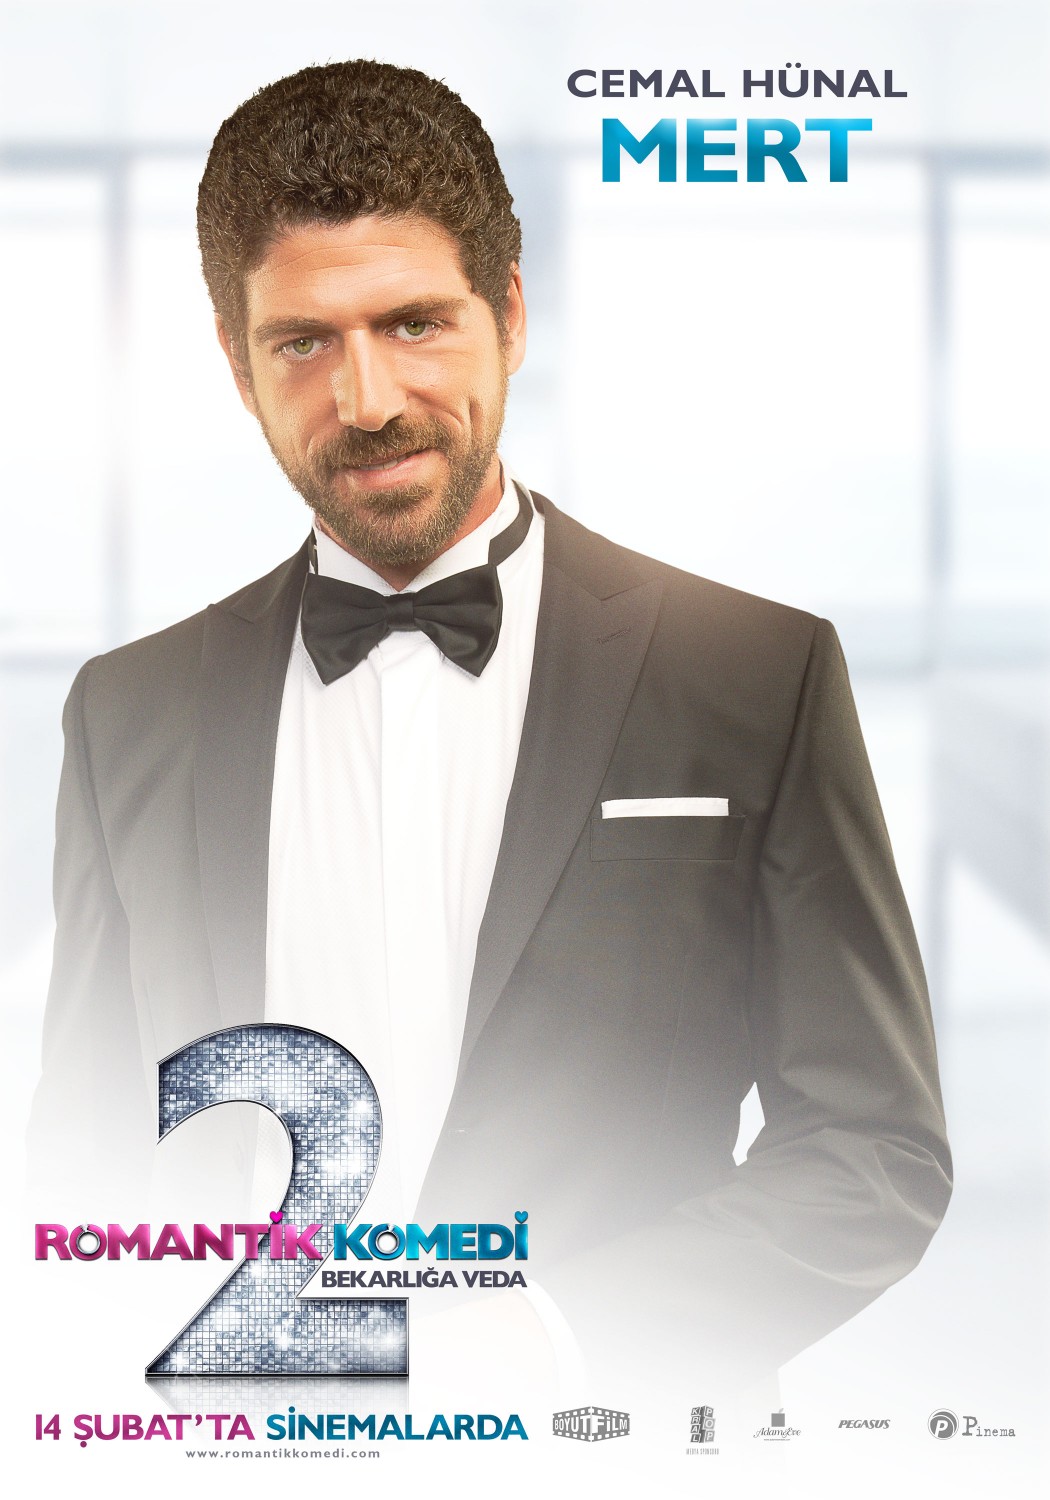 Extra Large Movie Poster Image for Romantik komedi 2: Bekarliga veda (#8 of 9)